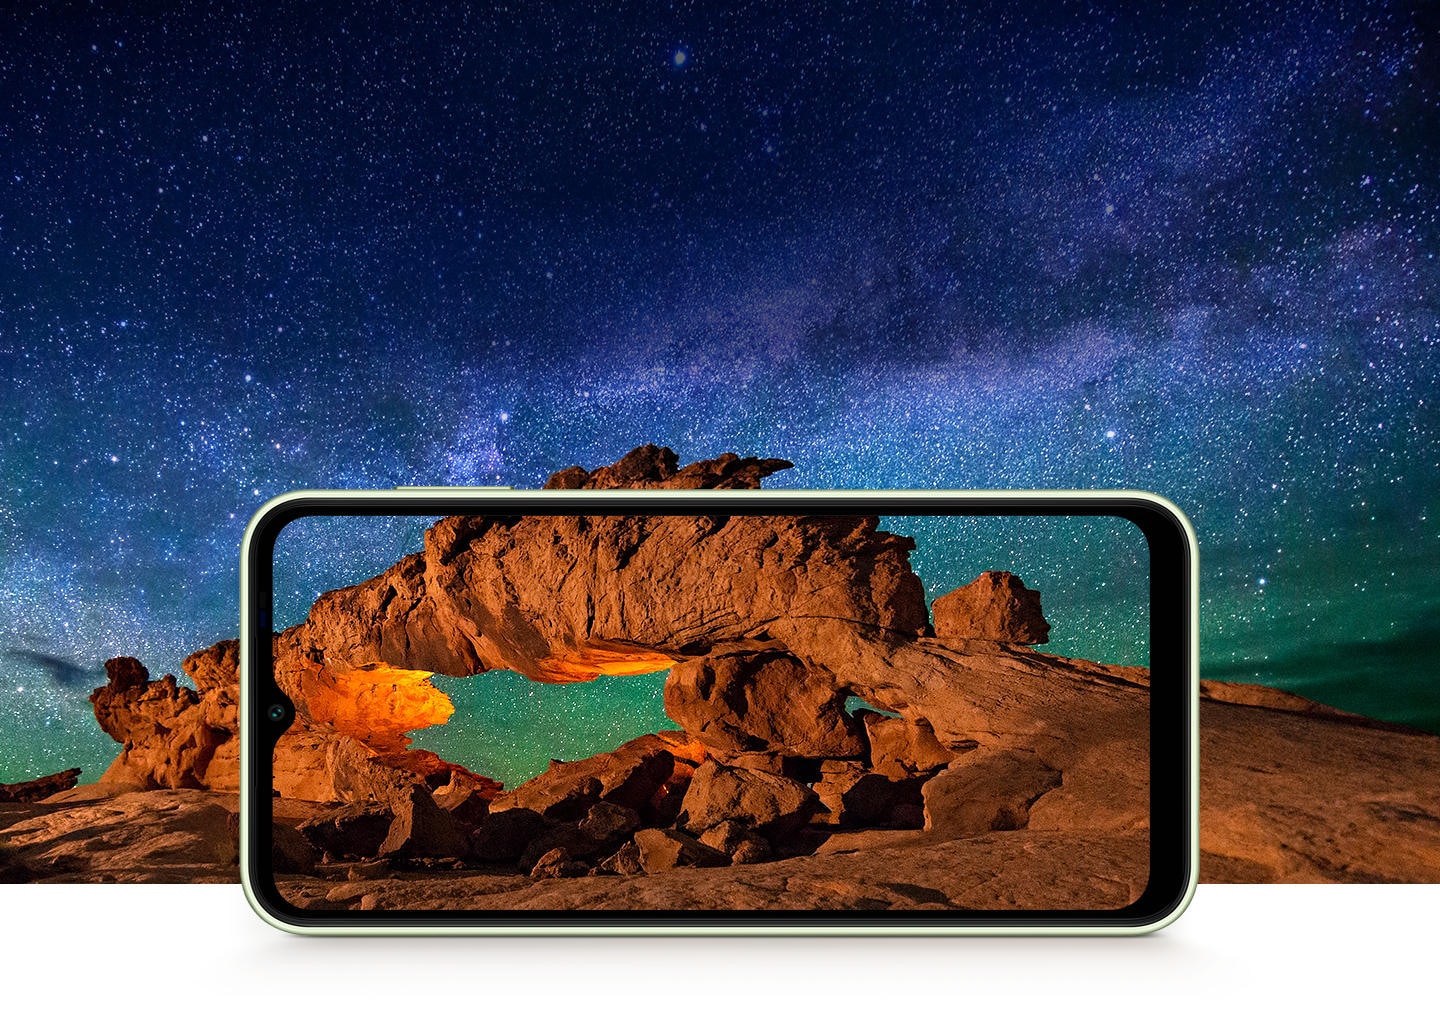 Galaxy A14 5G 以橫向模式顯示無垠星空下壯麗的橘棕岩石。照片延伸出裝置螢幕外，強調顯示螢幕所帶來的沉浸式生動體驗。